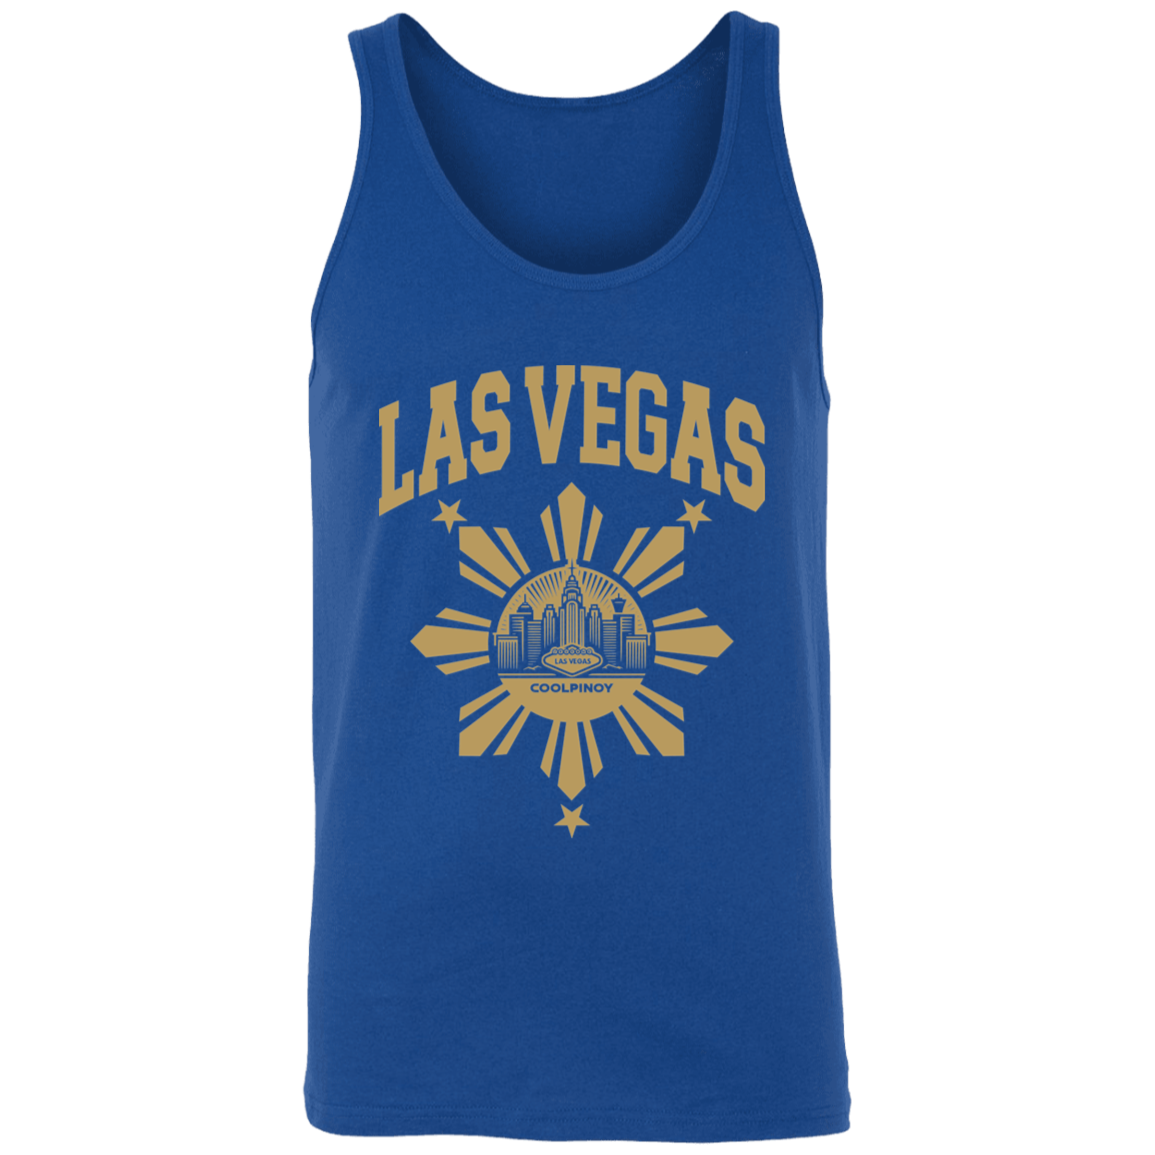 Las Vegas with Sun and Stars Unisex Cotton Tank Top